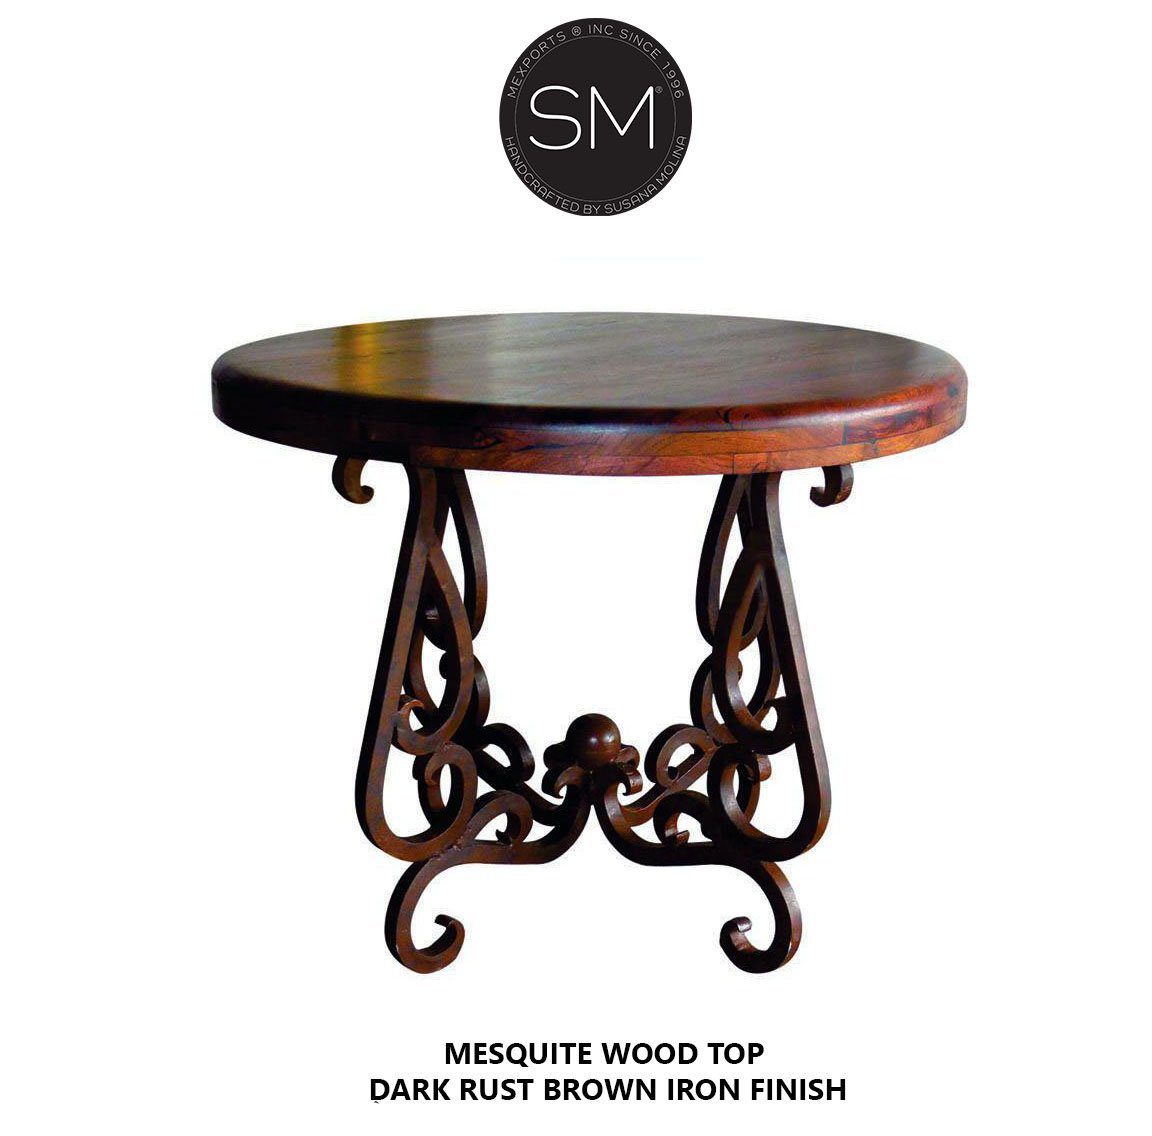 Hi-End Dernier Cri Large Occasional Table w/ Rustic Mesquite Wood Top - Model 1240L